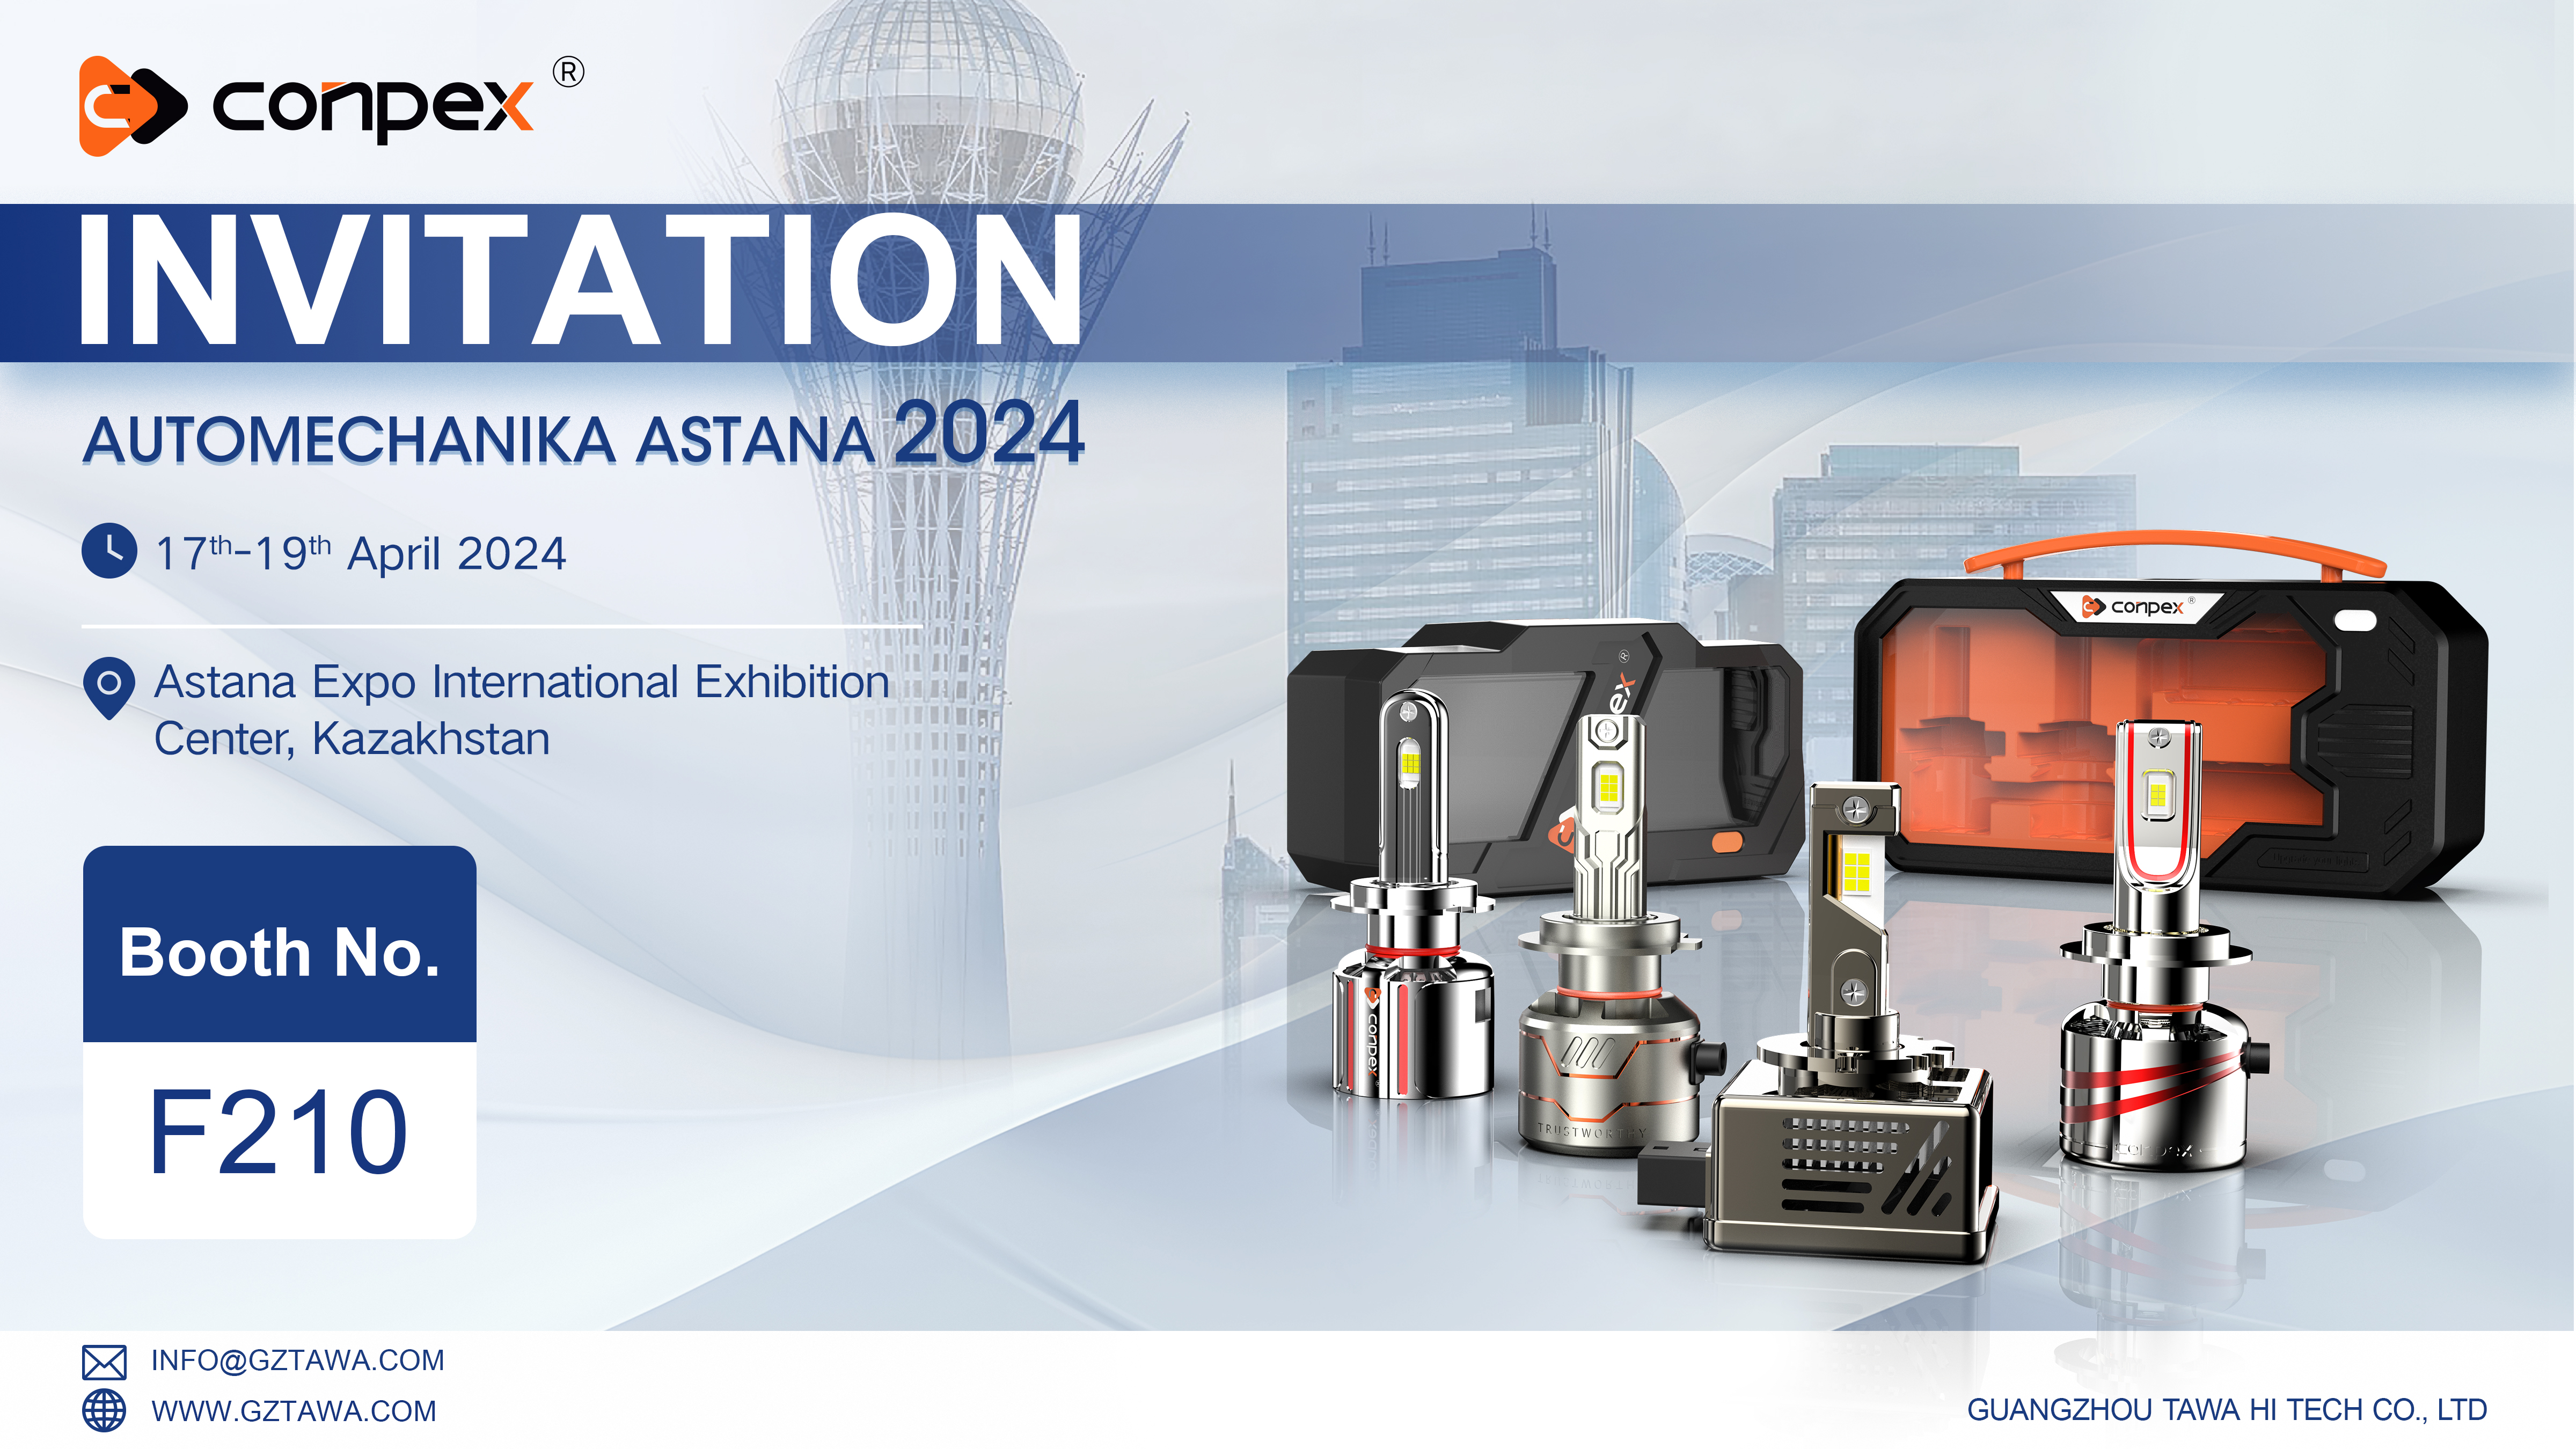 Discover Conpex at Automechanika Astana 2024!